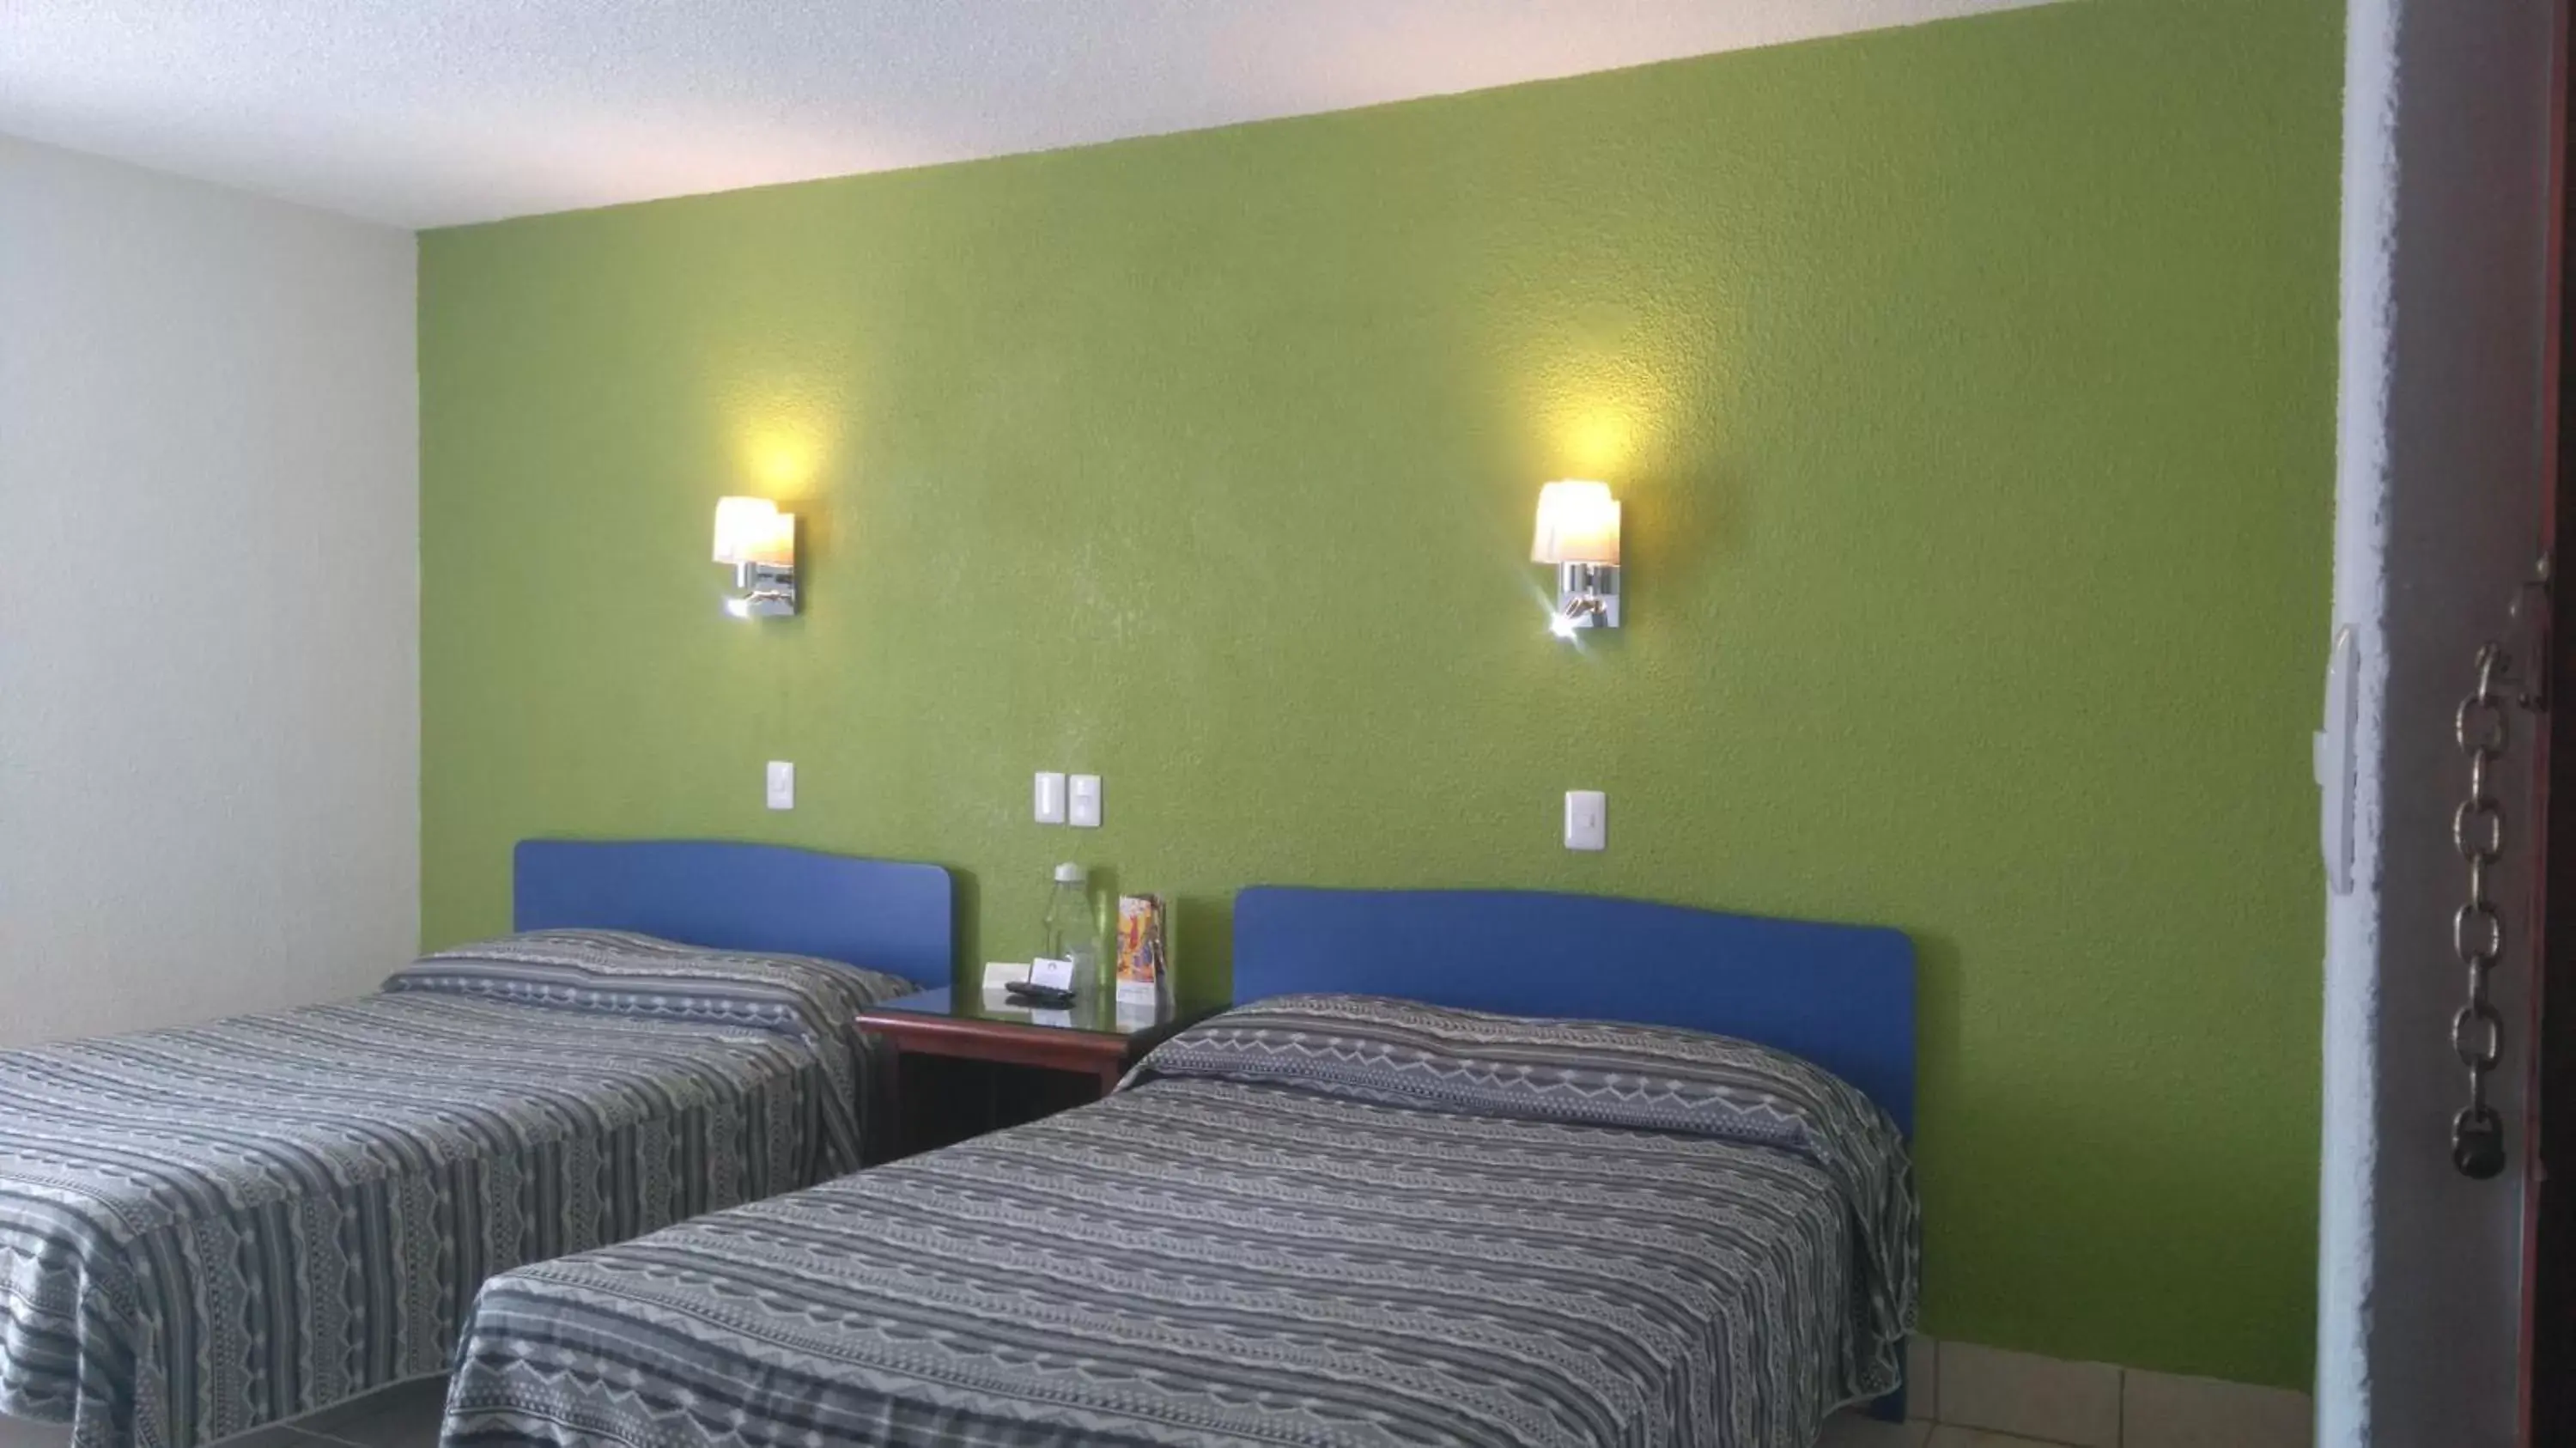 Bed, Room Photo in Hotel Aurora